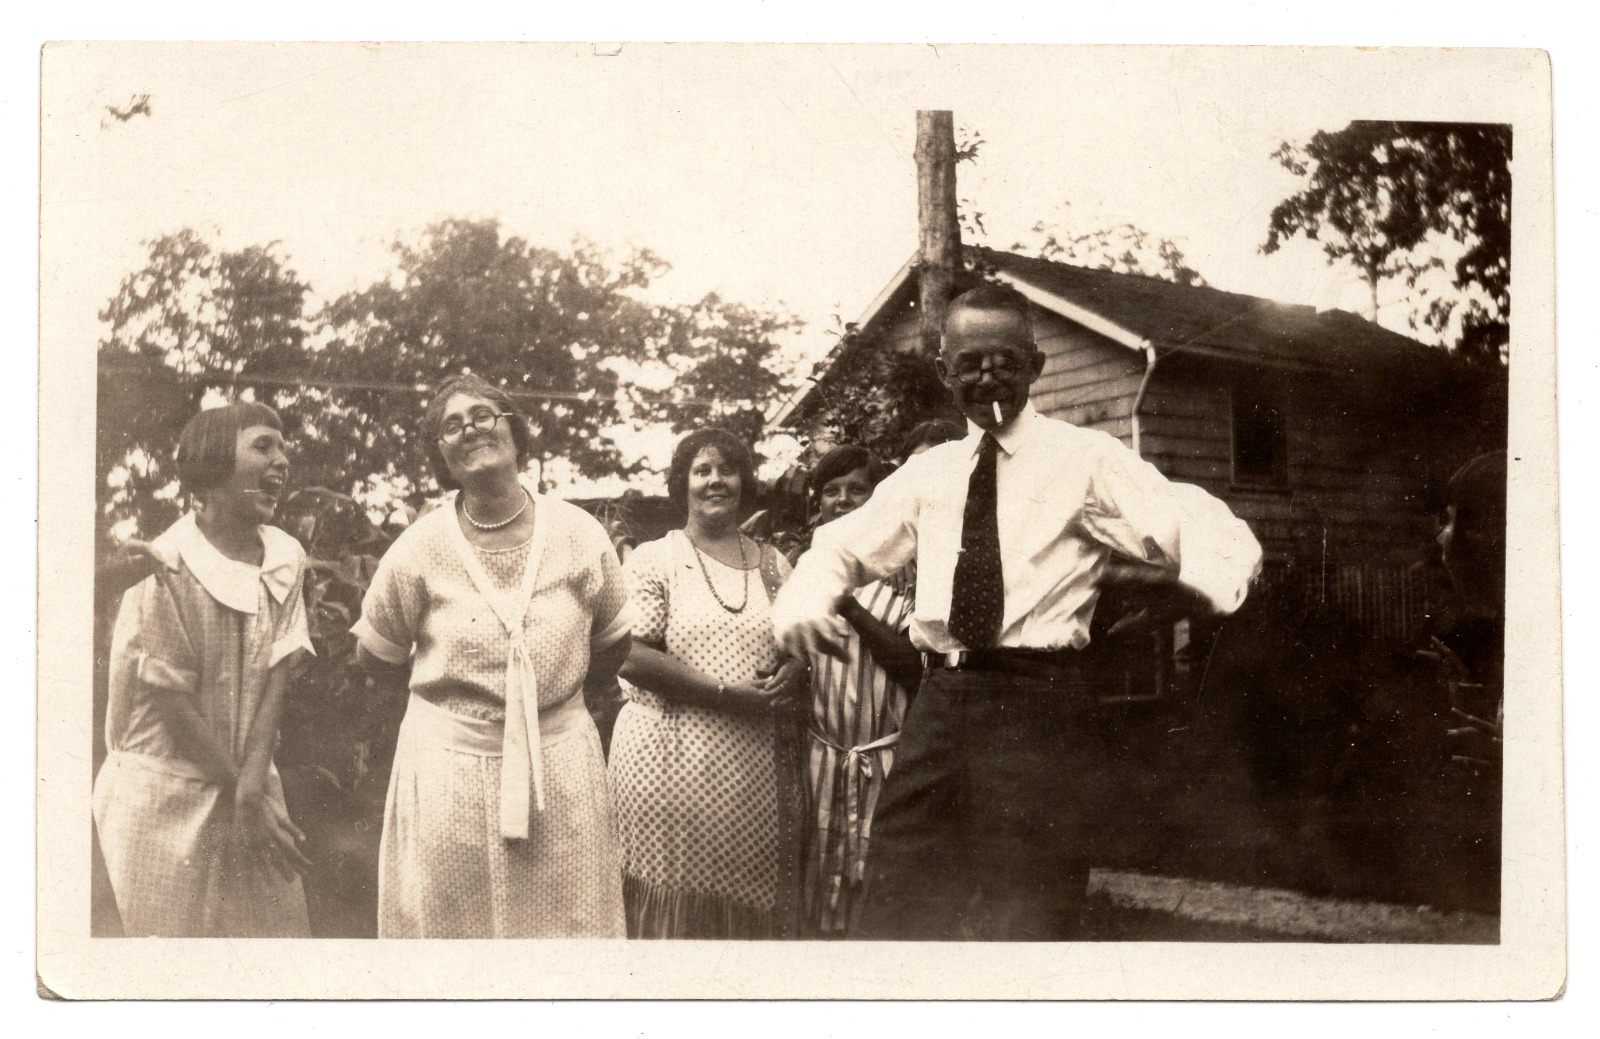 Antique/Vintage Snapshot of a Family Having Fun/Laughing